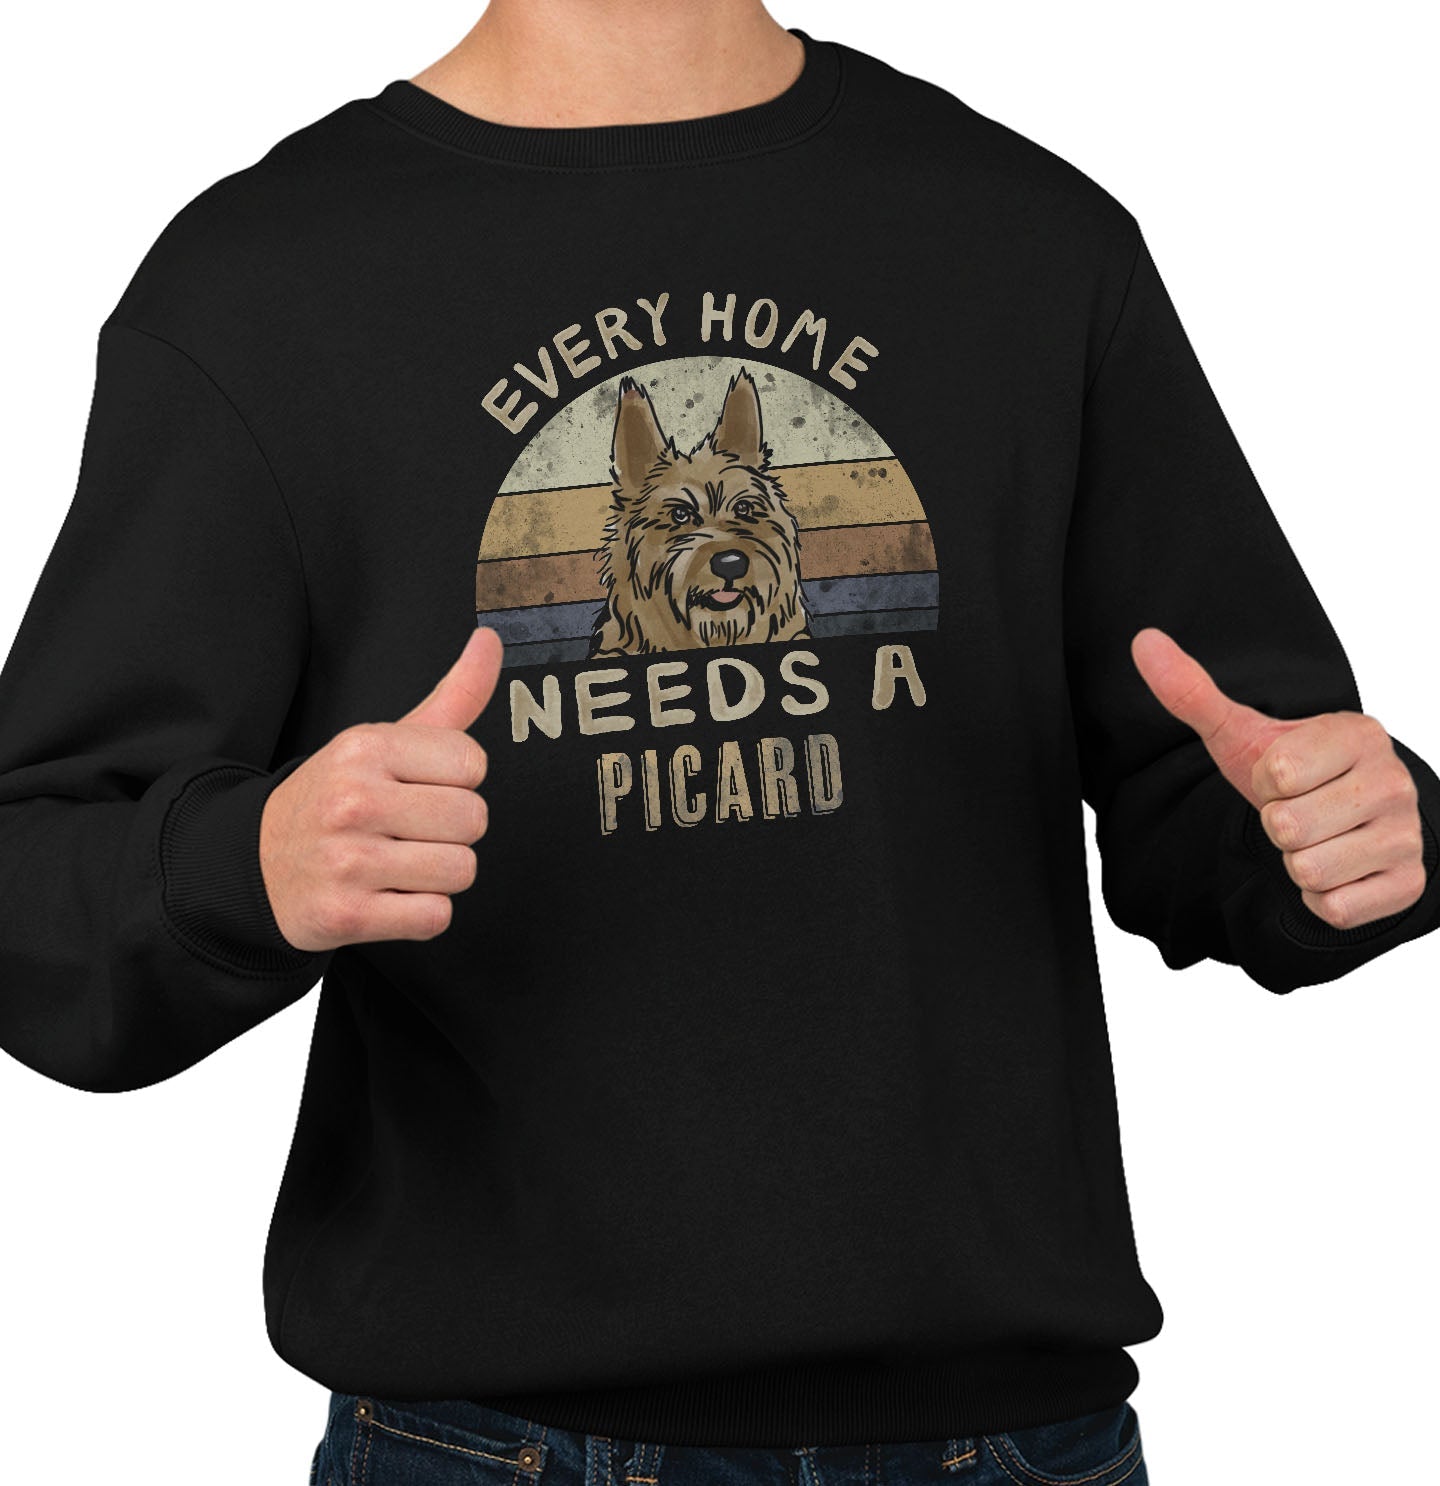 Every Home Needs a Berger Picard - Adult Unisex Crewneck Sweatshirt